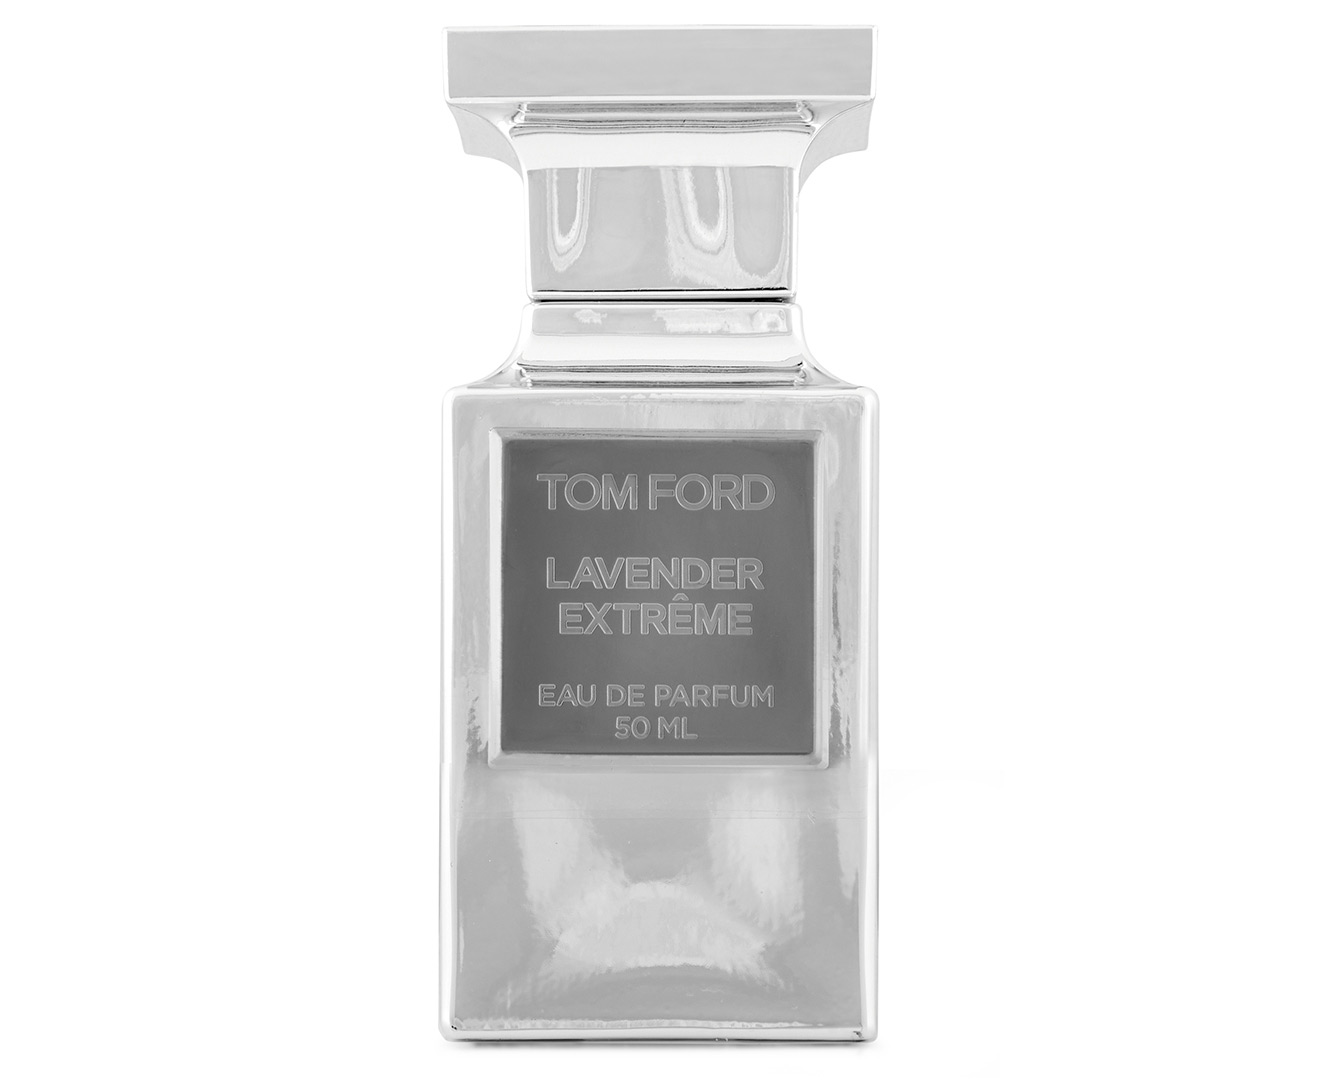 Tom Ford Lavender Extreme EDP Perfume 50mL 